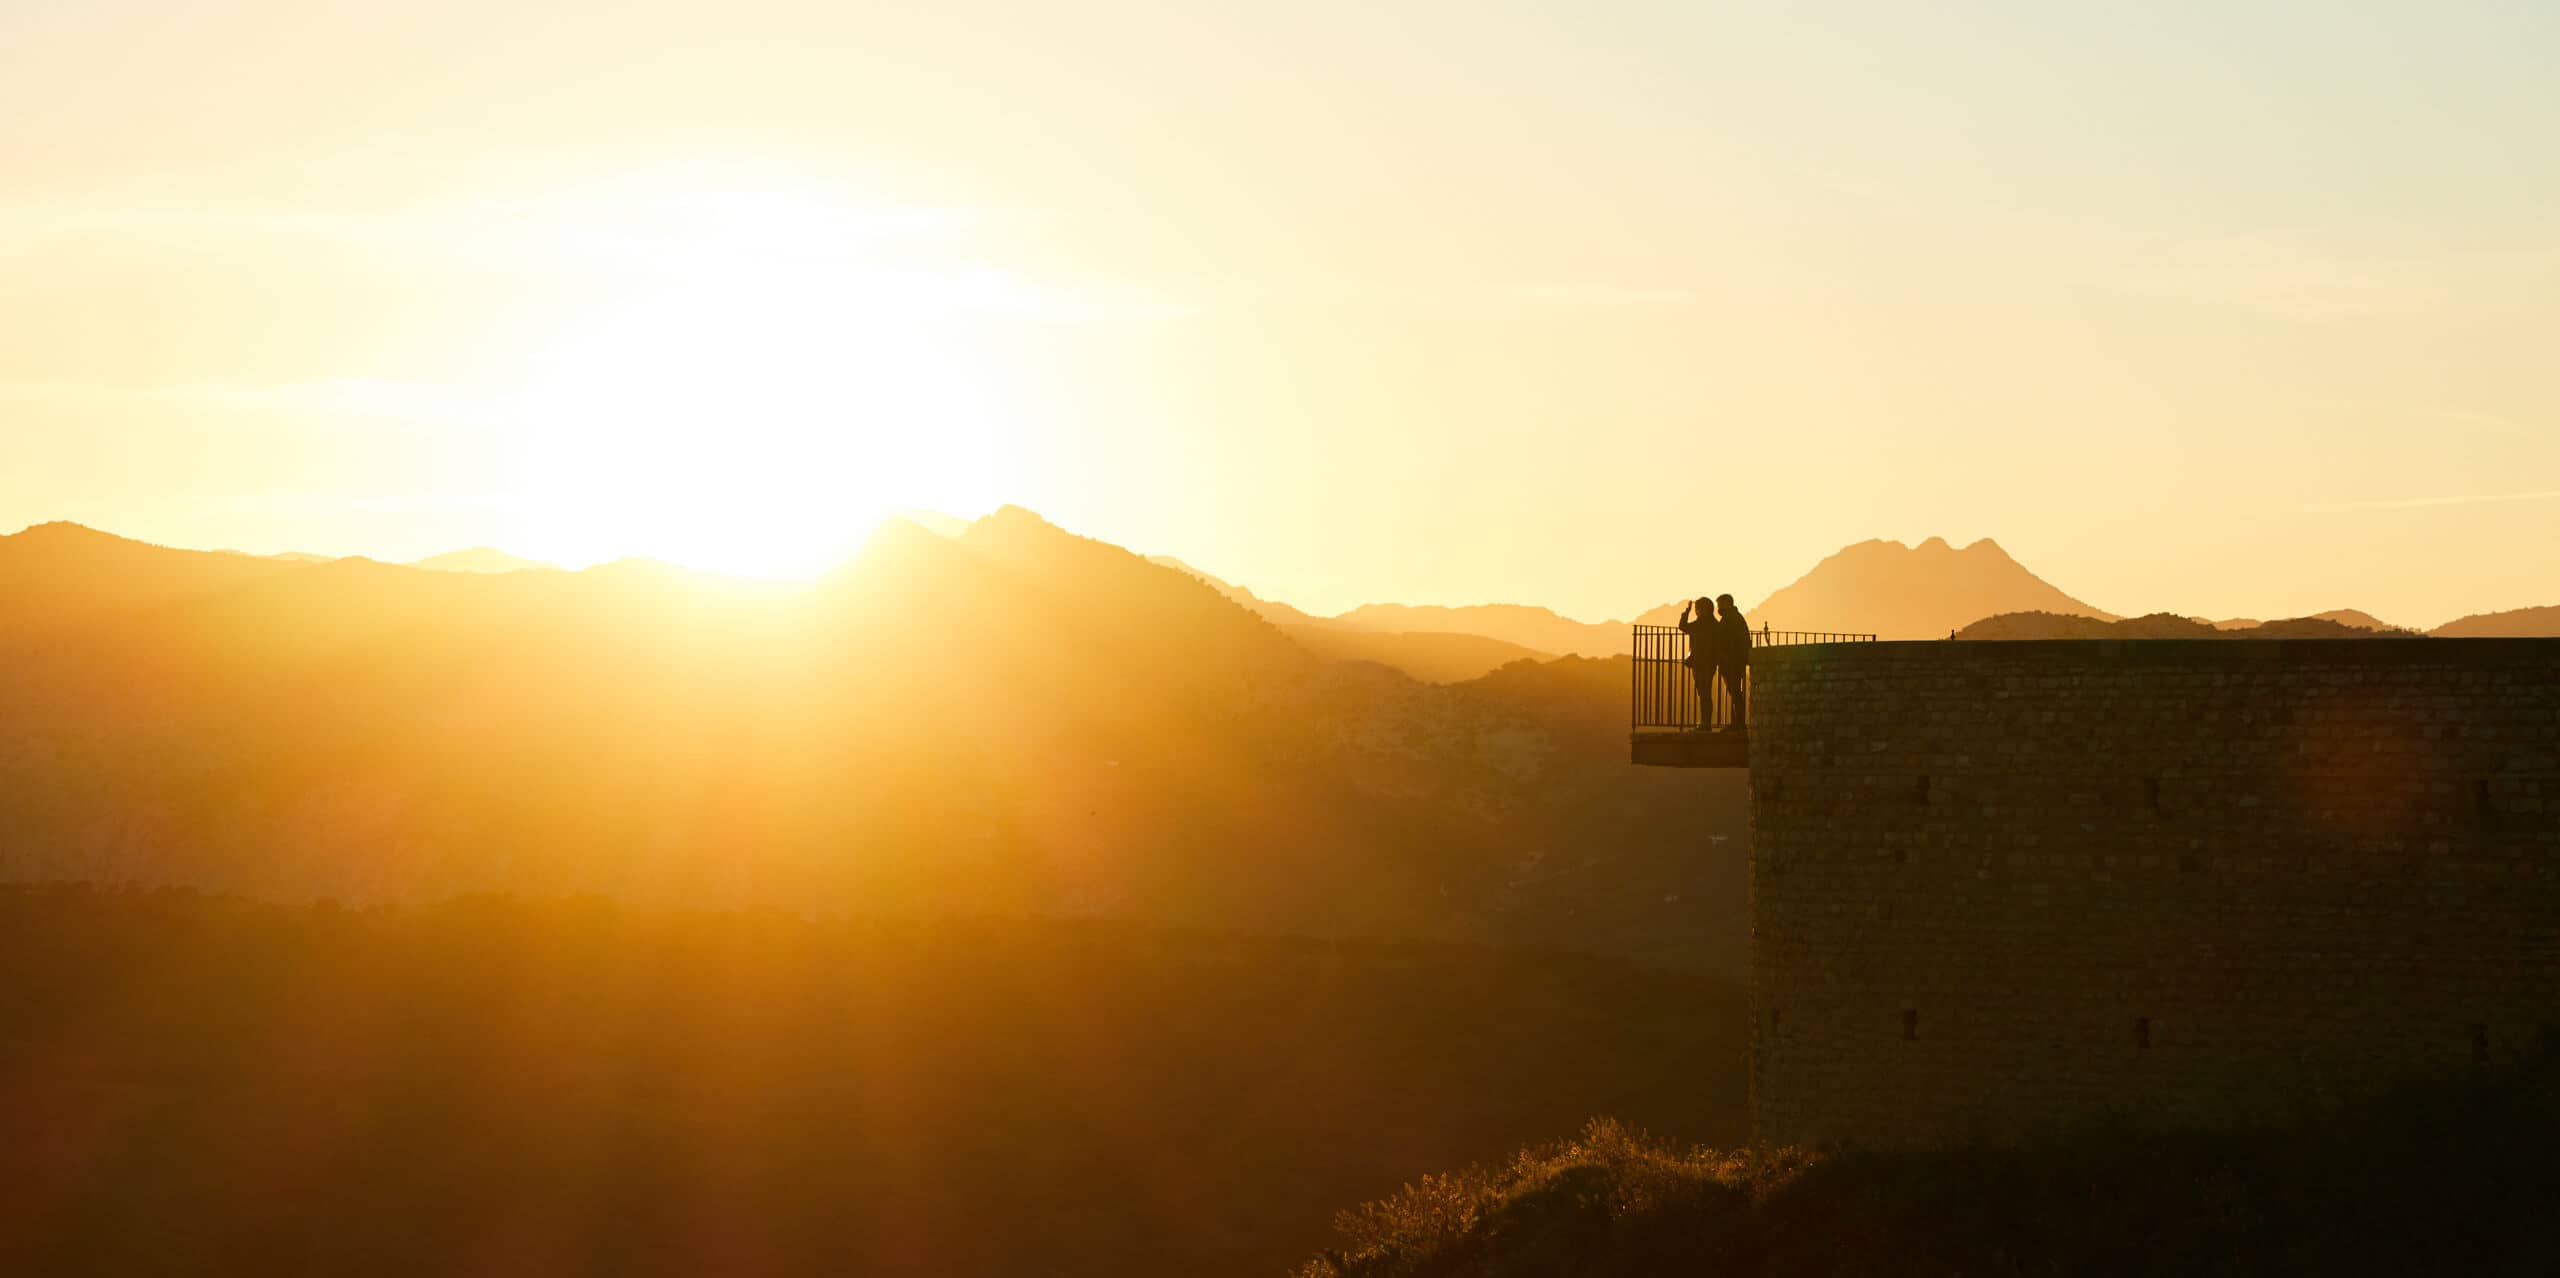 Two people standing on a balcony overlooking the Serranía de Ronda